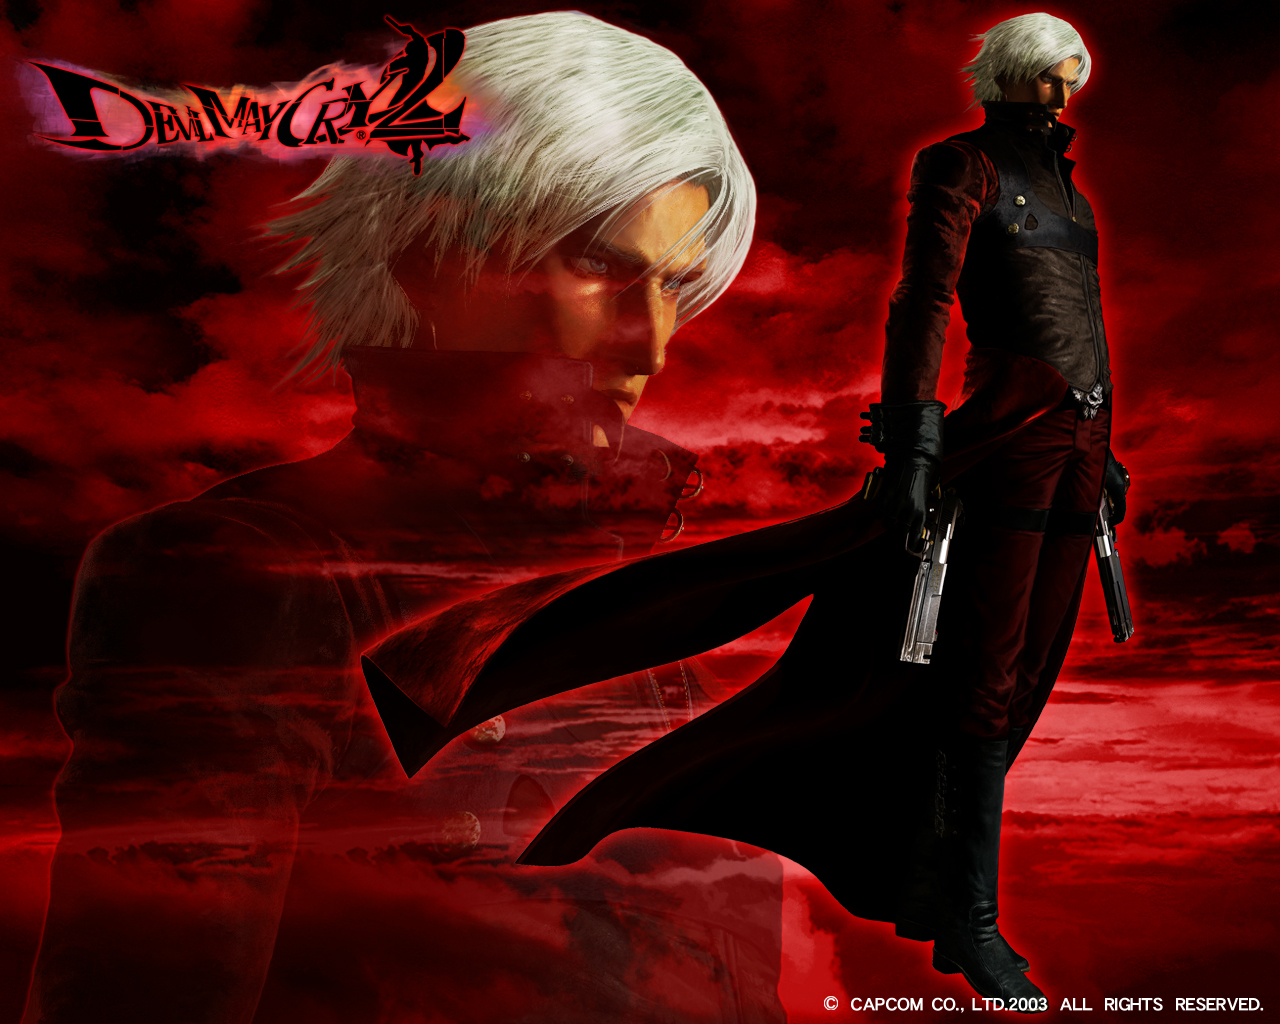 Devil May Cry 3 Wallpaper Dante